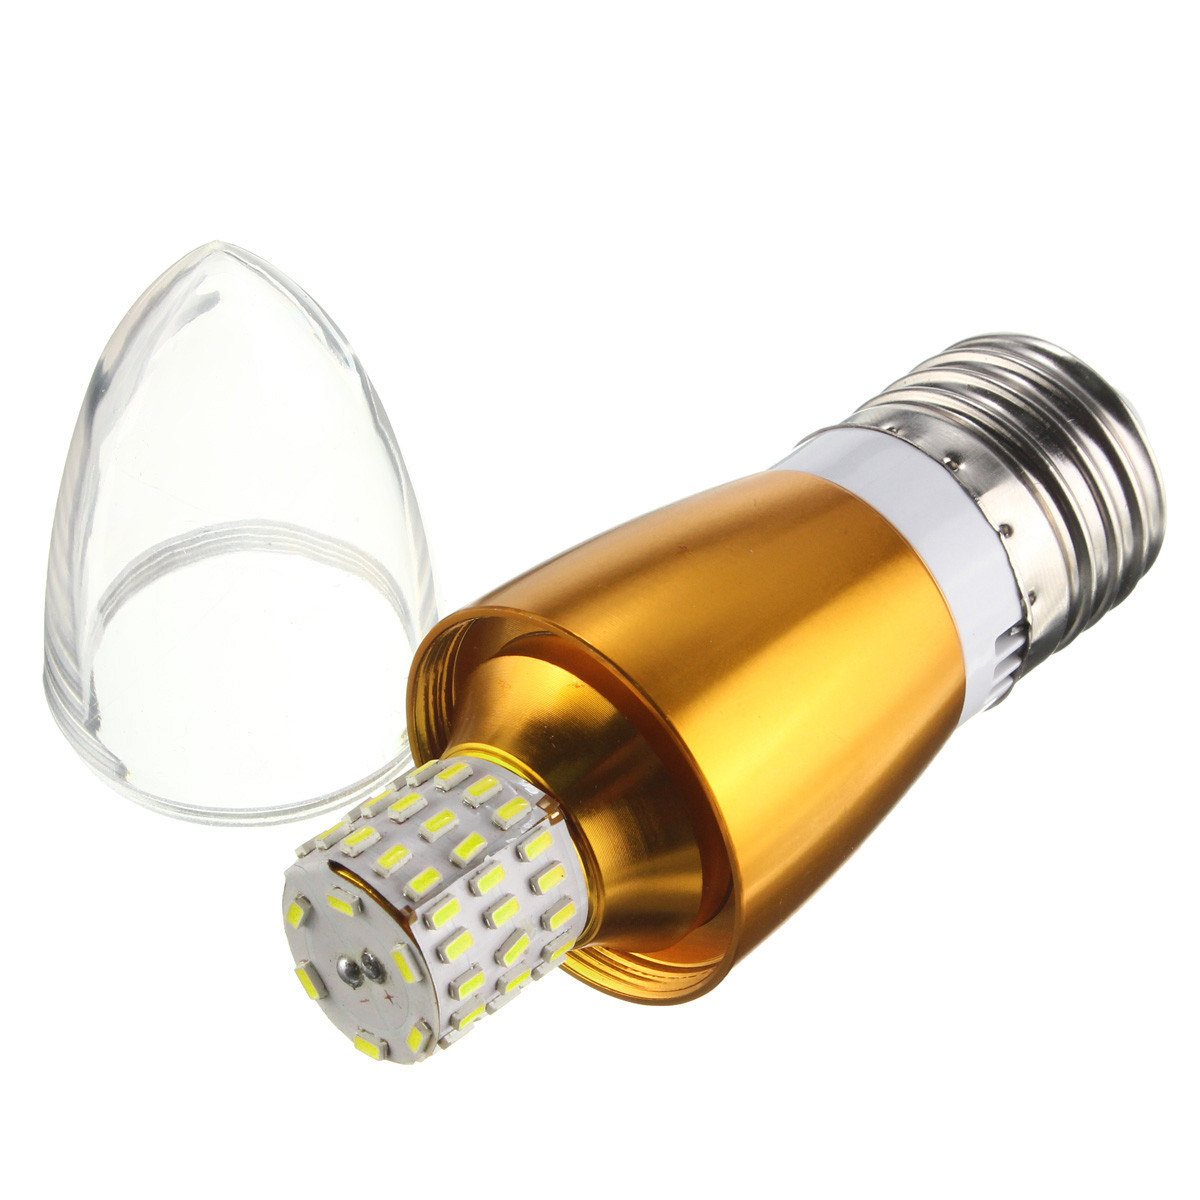 Dimmable-E27-E14-E12-7W-60-SMD-3014-LED-Pure-White-Warm-White-Candle-Light-Lamp-Bulb-AC110V-1082667-6